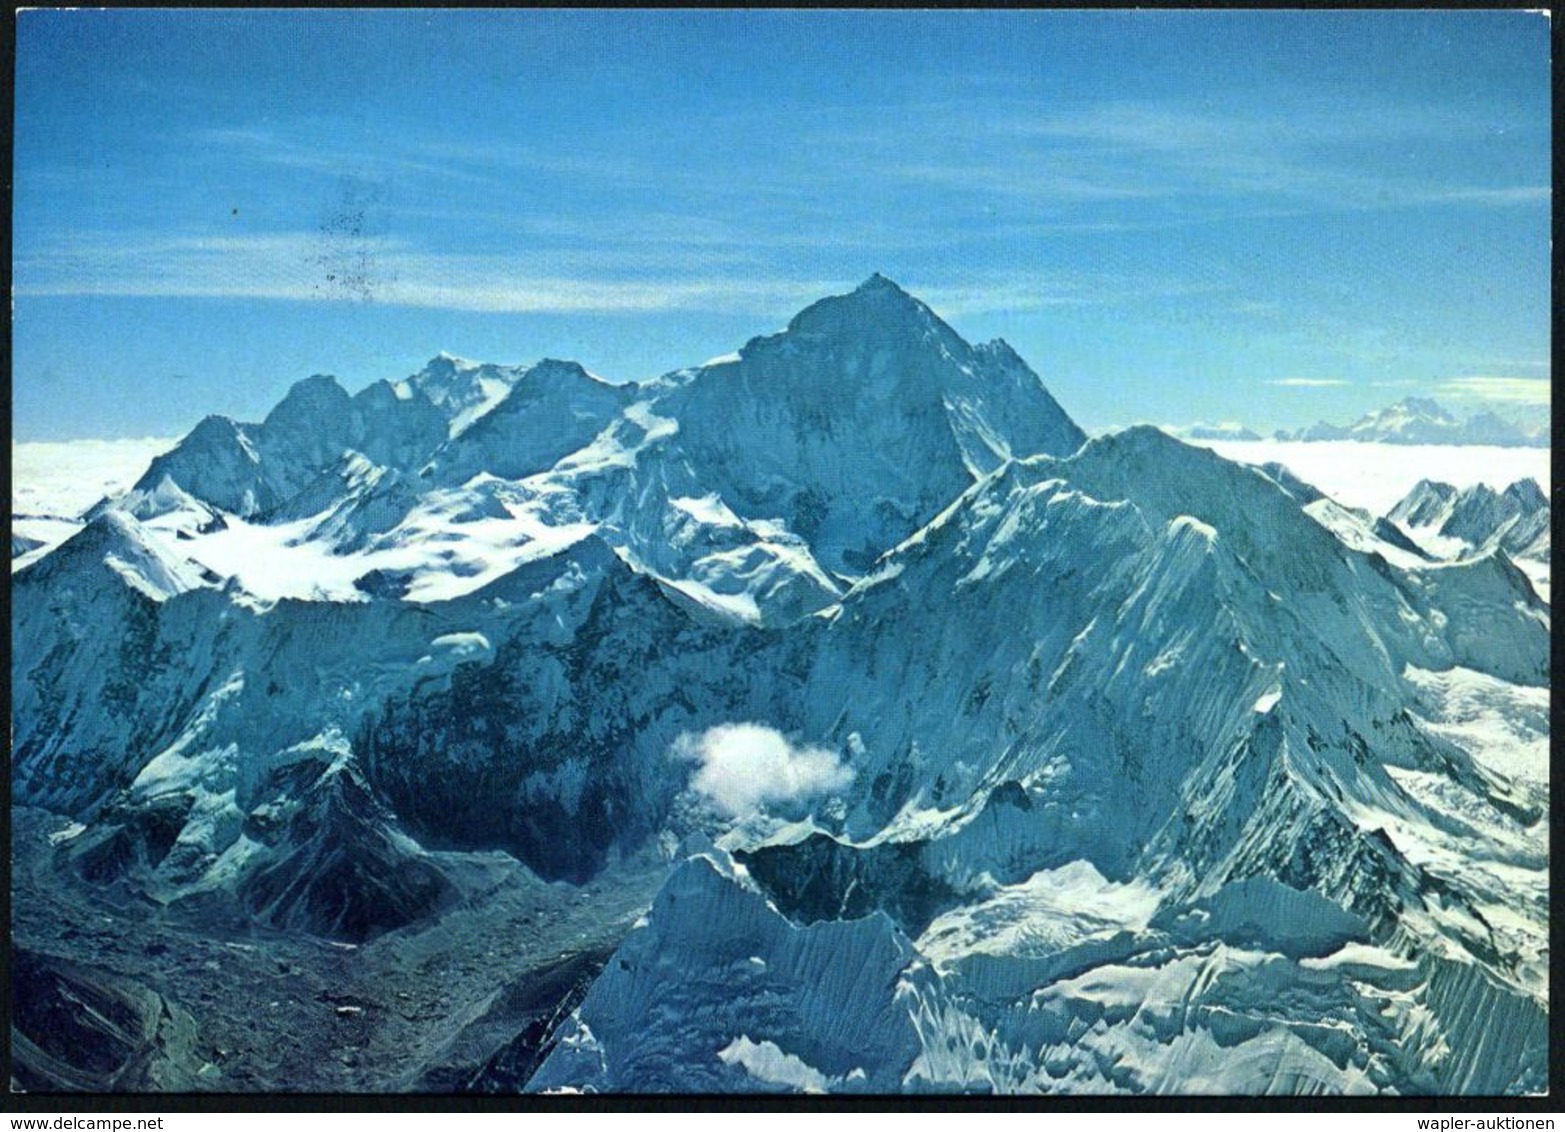 NEPAL /  B.R.D. 1979 (20.11.) SSt.: KATHMANDU/G.P.O./MAKALU 5TH MOUNTAIN OF THE WORLD/SWISS-GERMAN/EXPEDITION (Berg/Mask - Klimmen